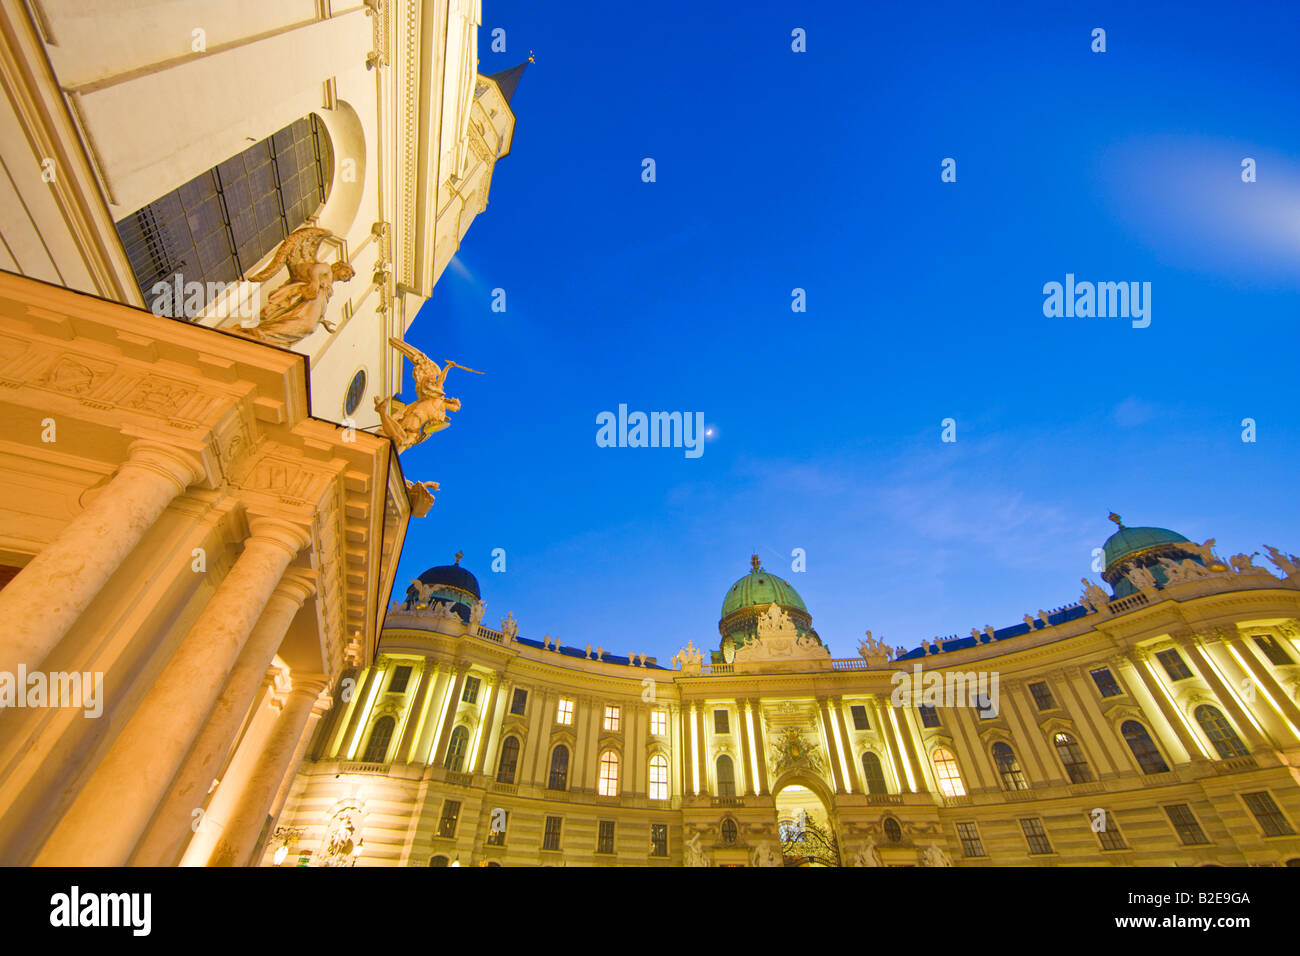 Palace and church lit up at dusk, Michaeler Platz, St. Michael's Church, Hofburg Imperial Palace, Vienna, Austria Stock Photo